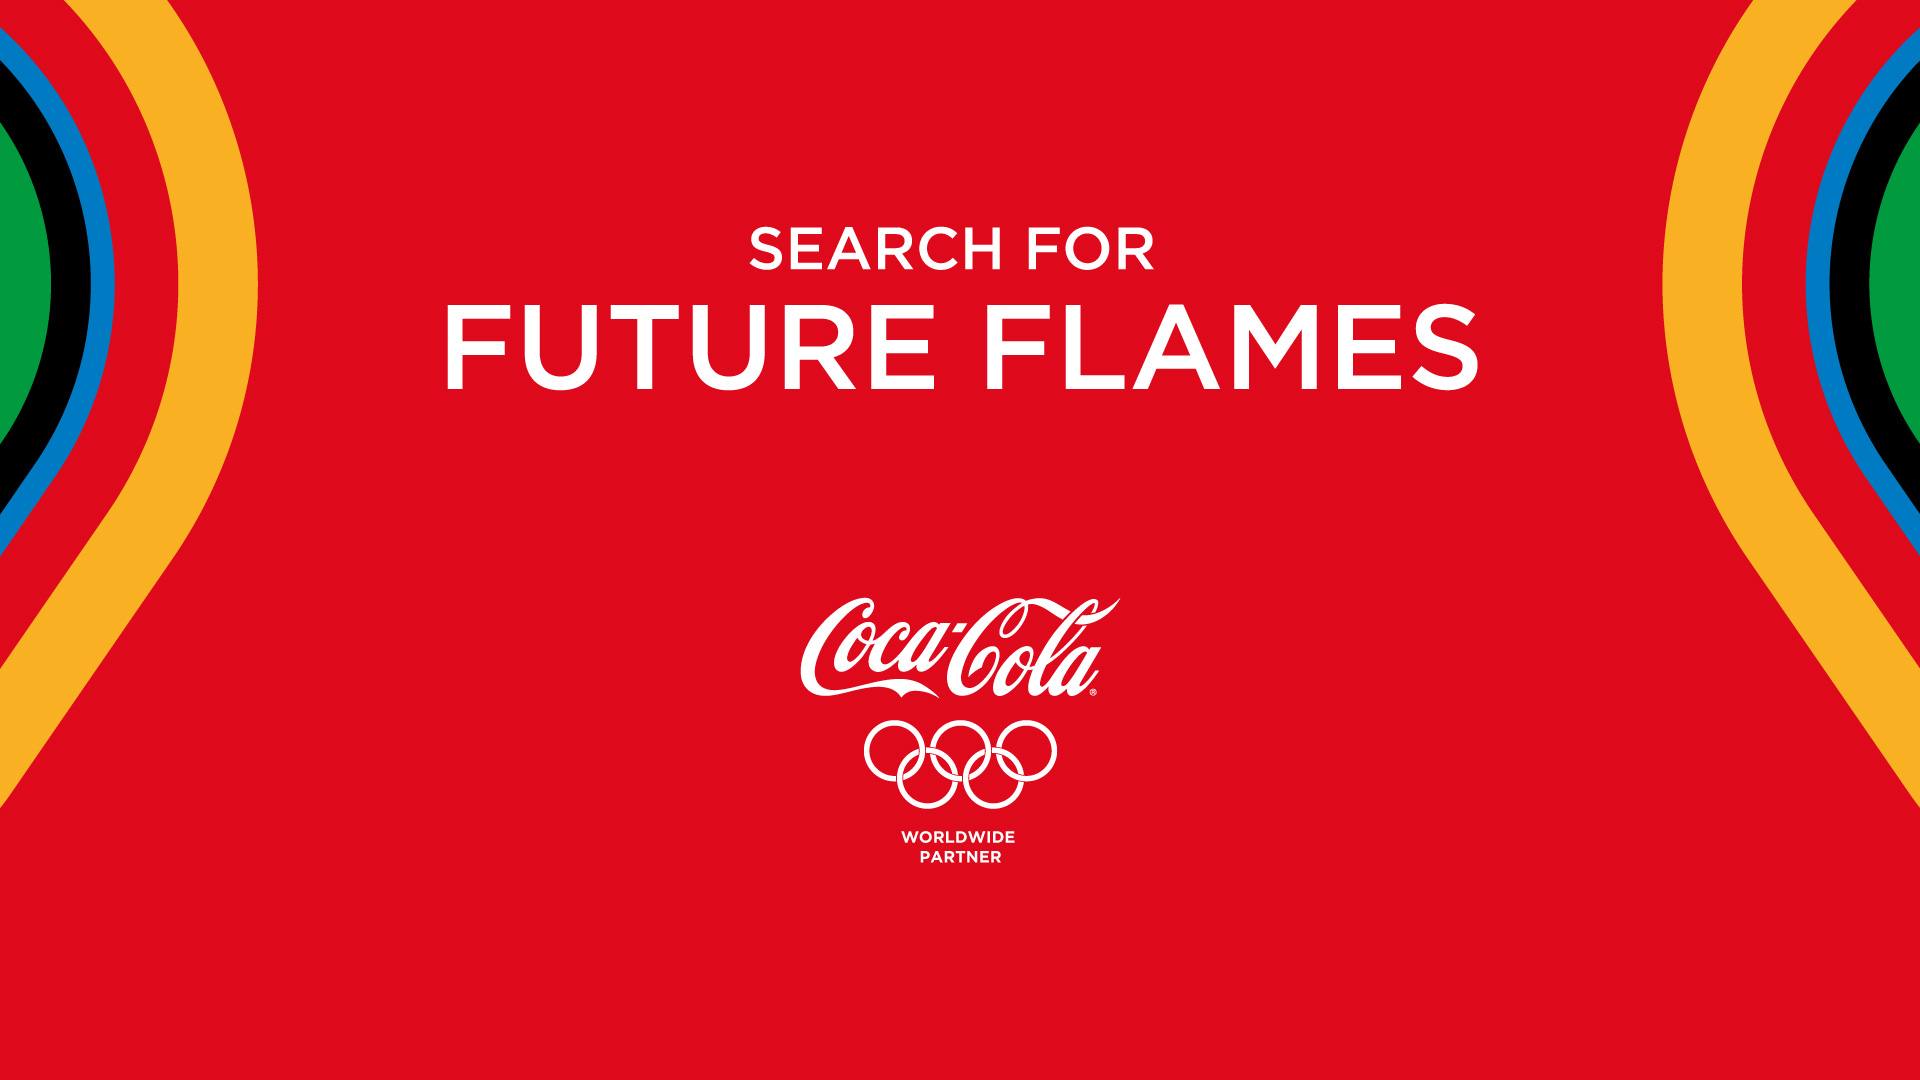 coca-cola-future-flames-design-05